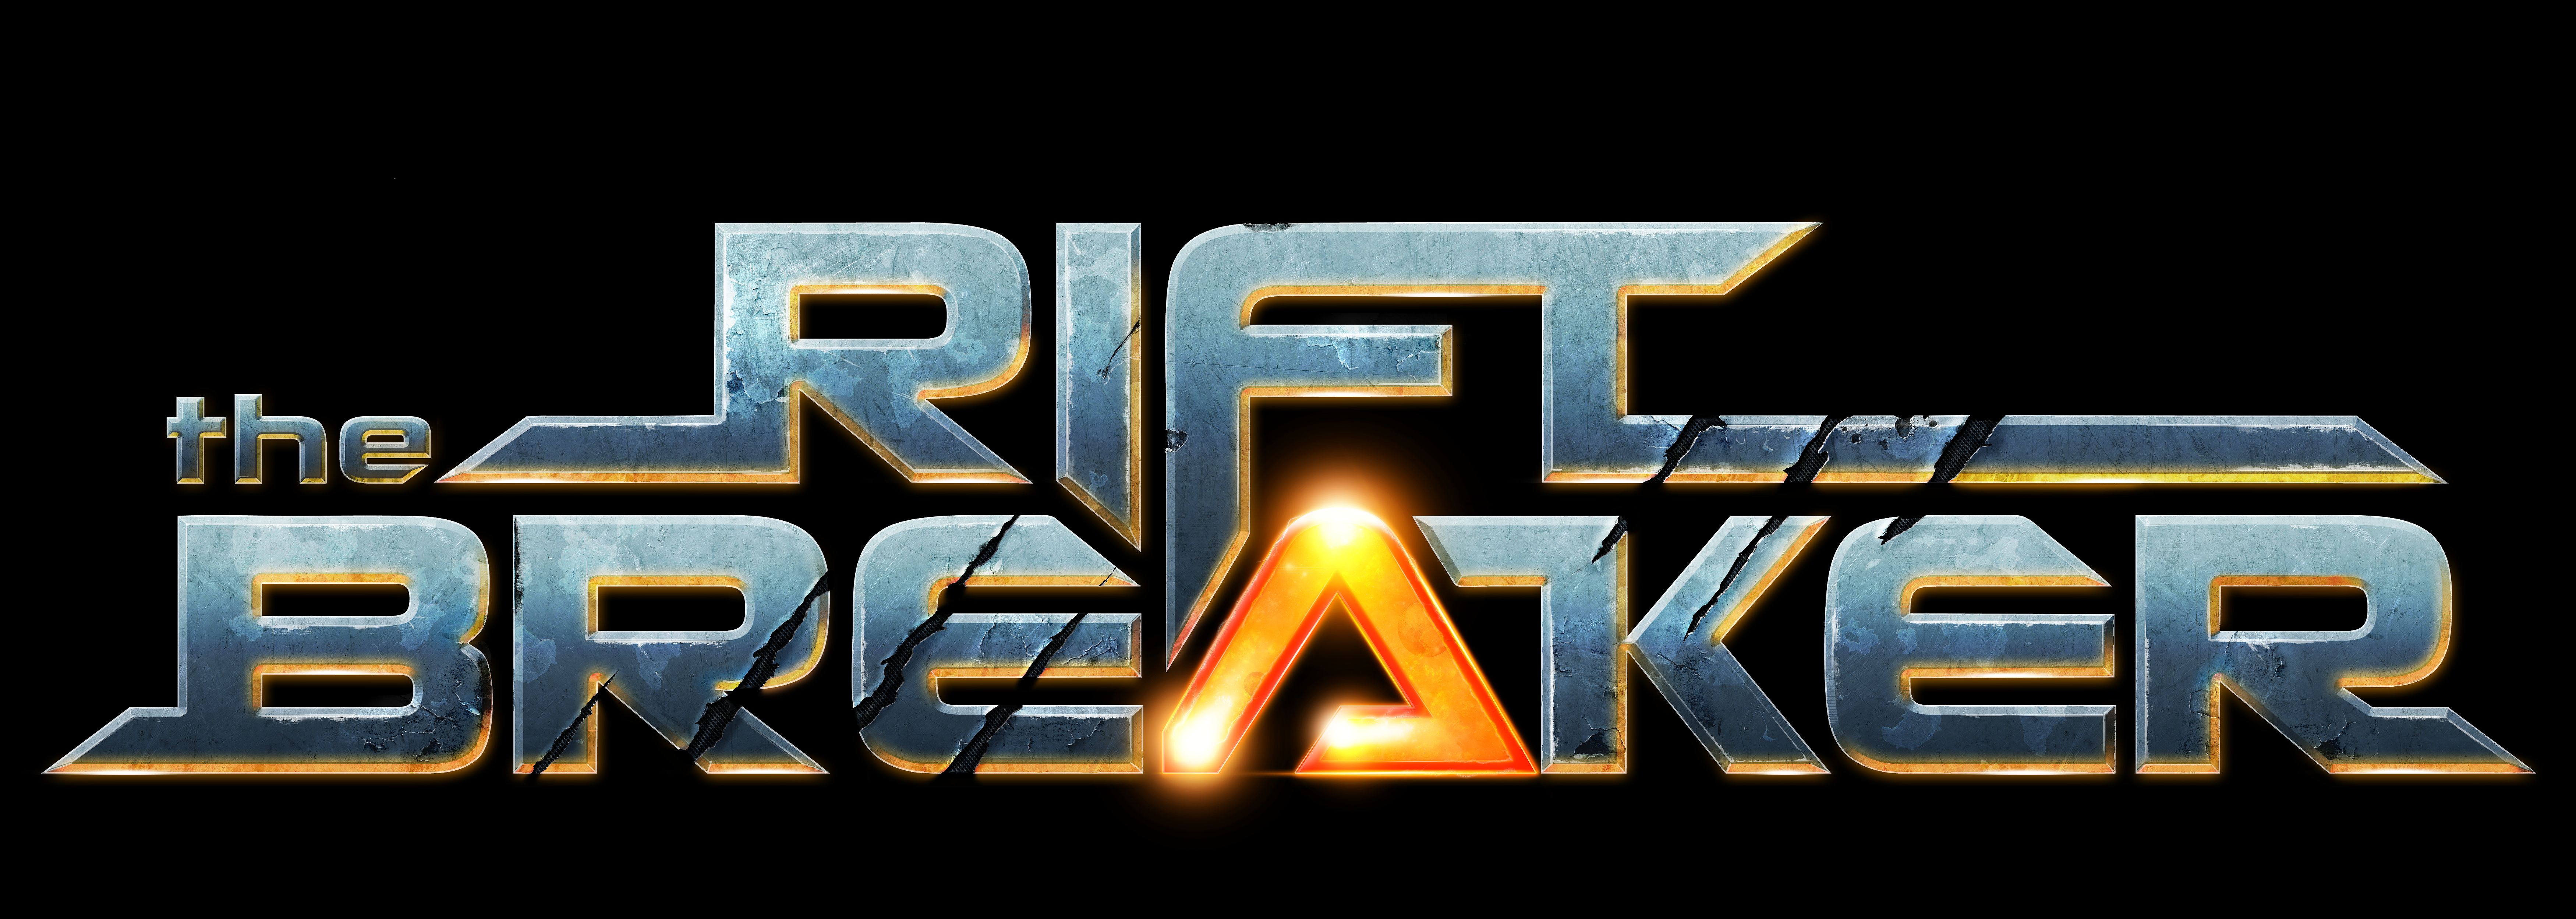 video game, the riftbreaker